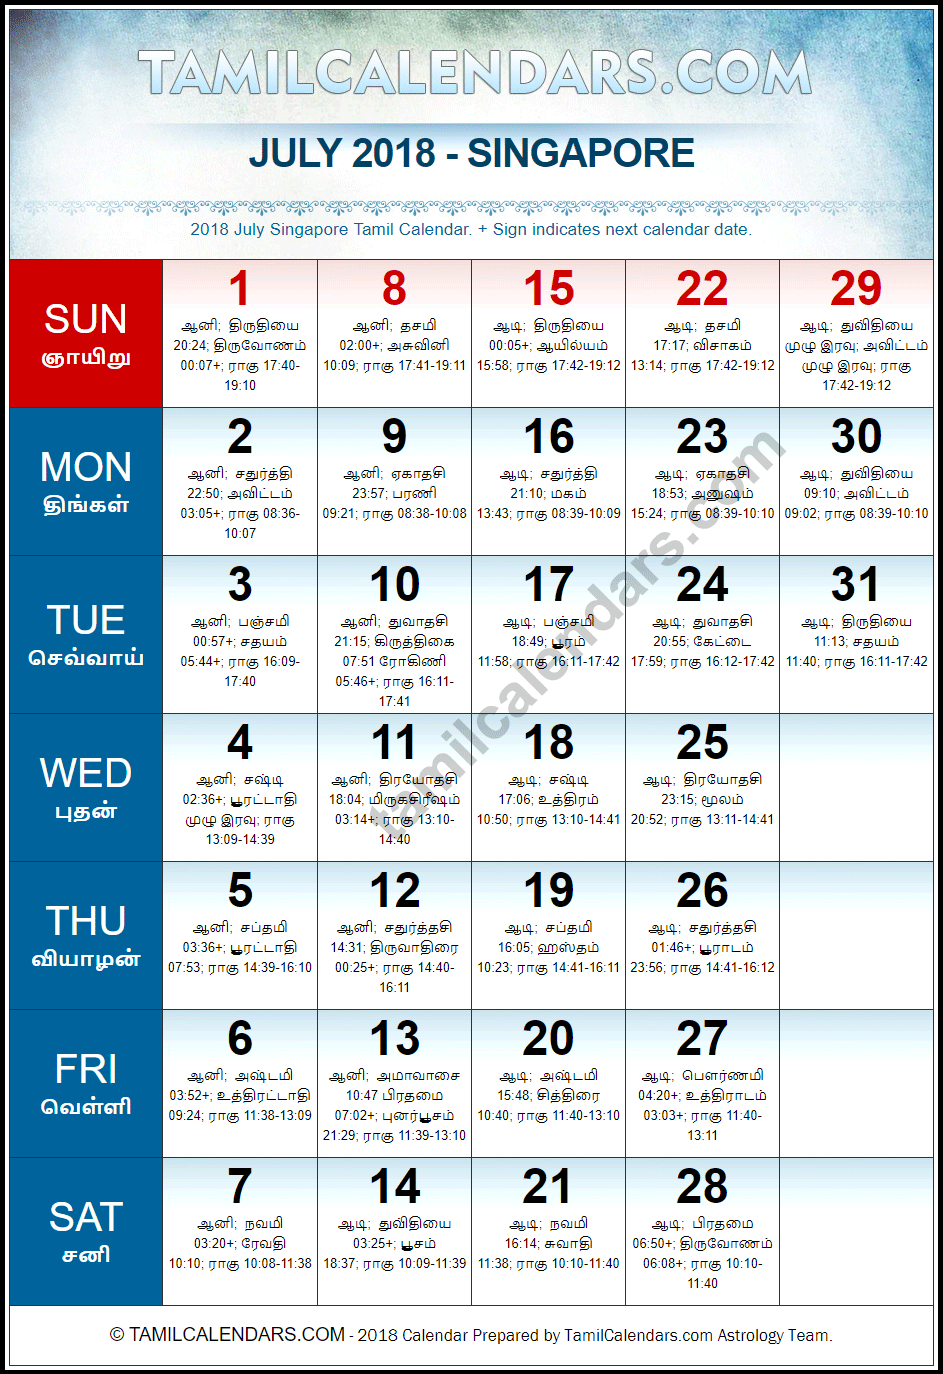 July 2018 Tamil Calendar for Singapore